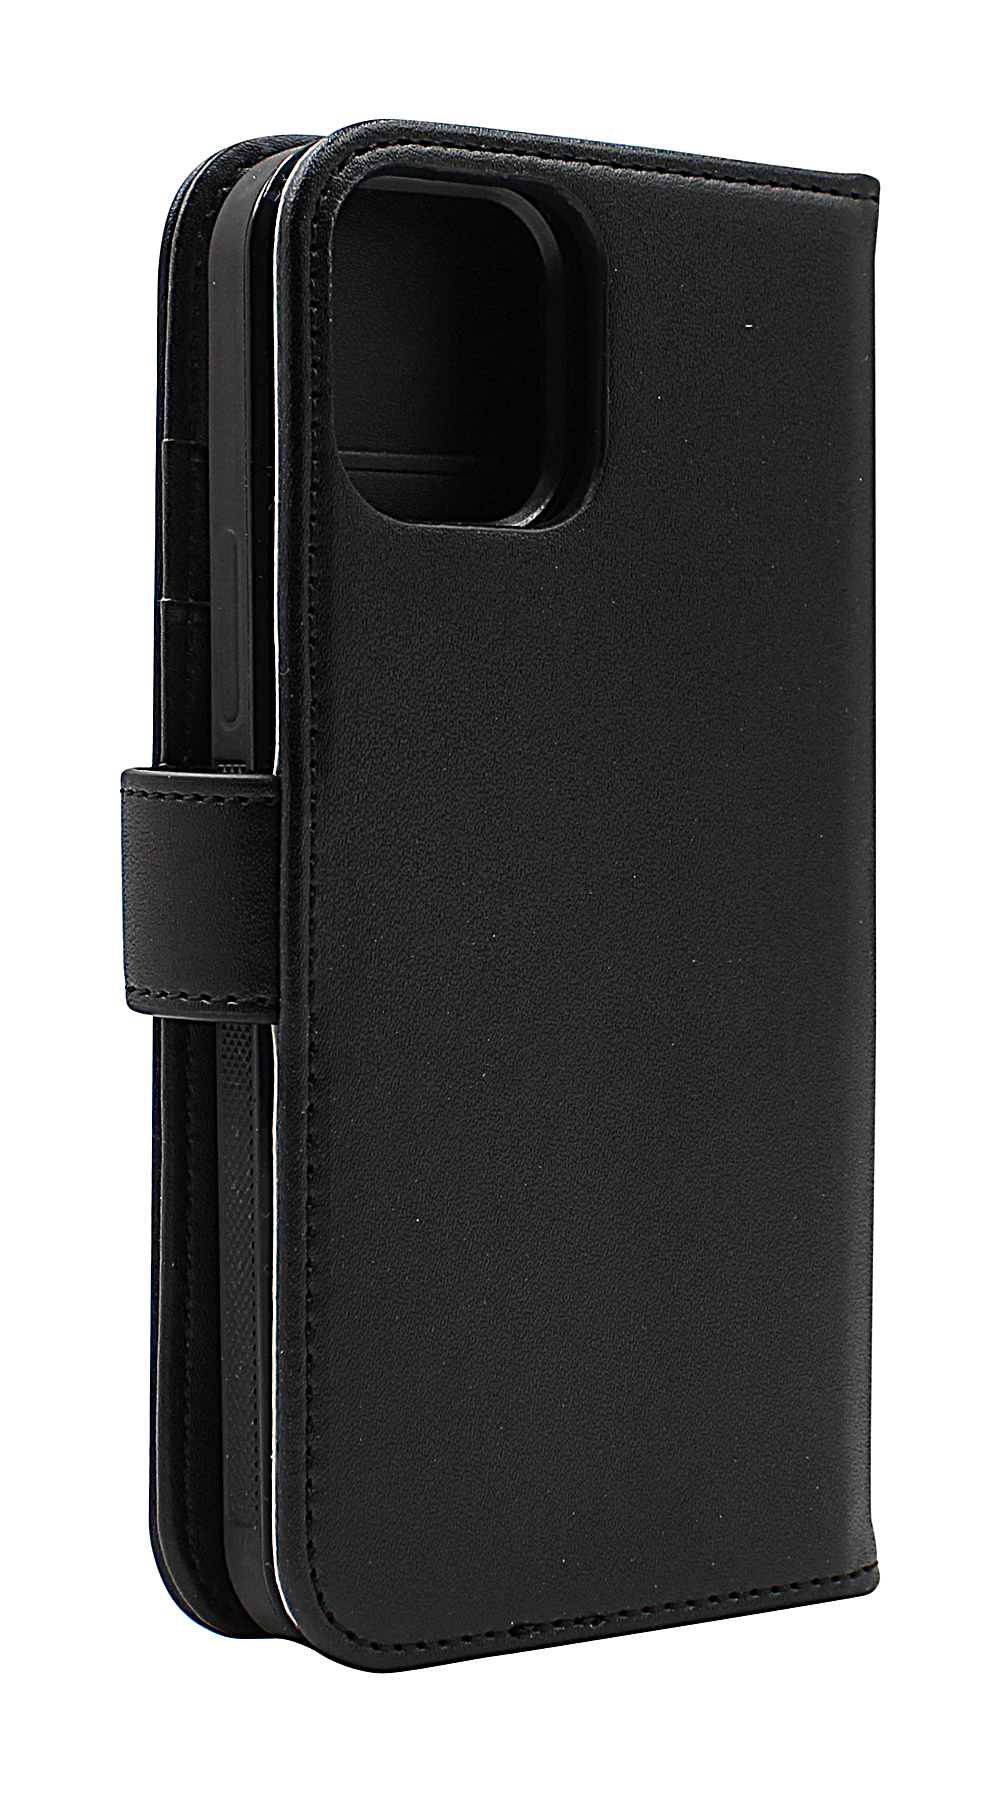 Skimblocker Magnet Wallet iPhone 12 (6.1)